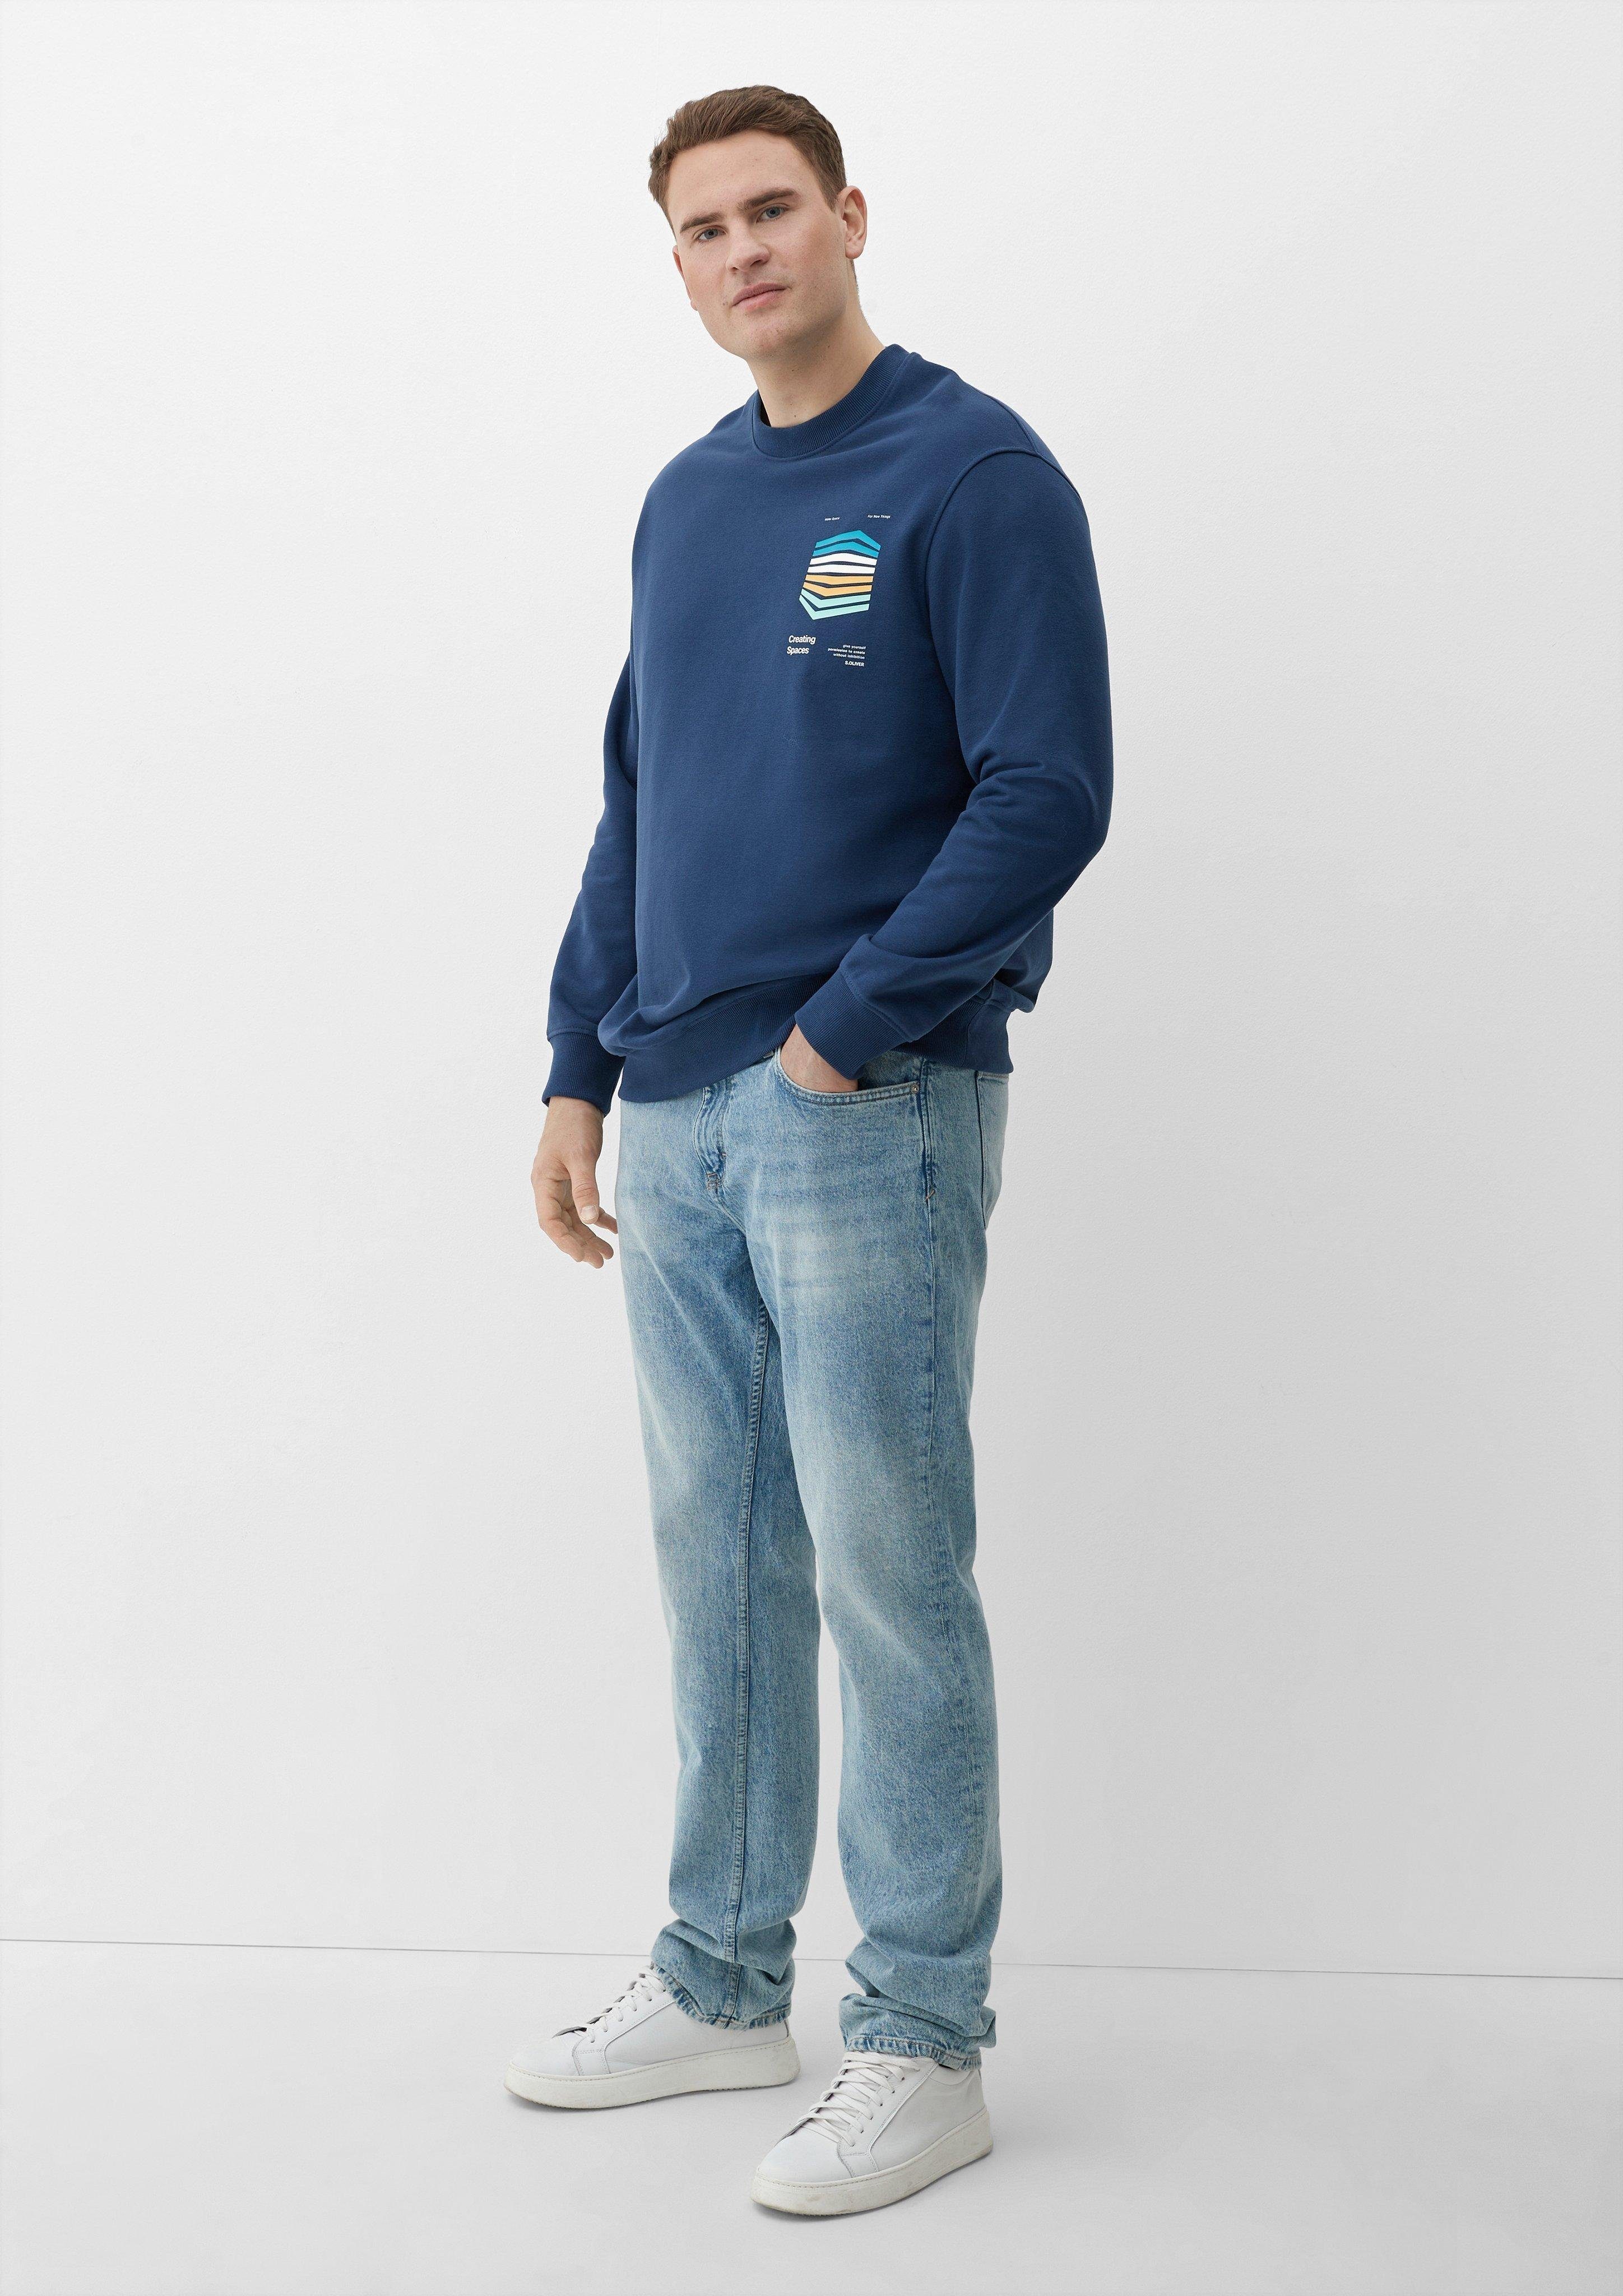 Frontprint Sweatshirt mit s.Oliver Sweatshirt tiefblau